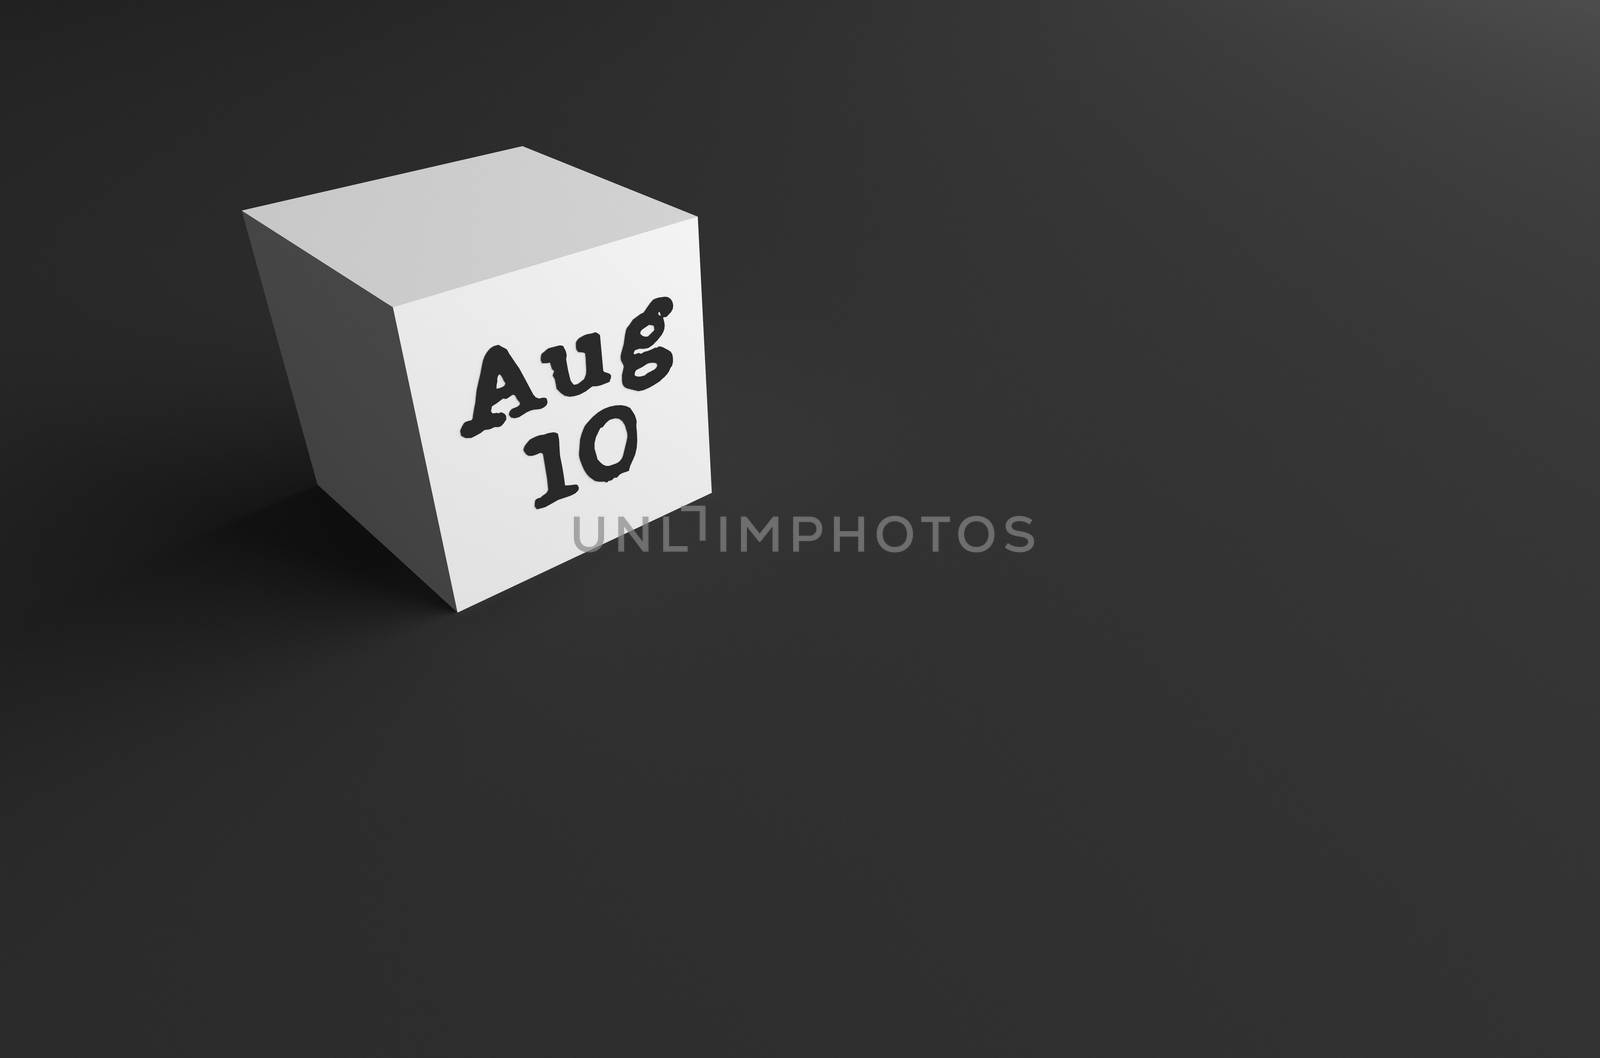 3D RENDERING OF Aug 10 by PrettyTG